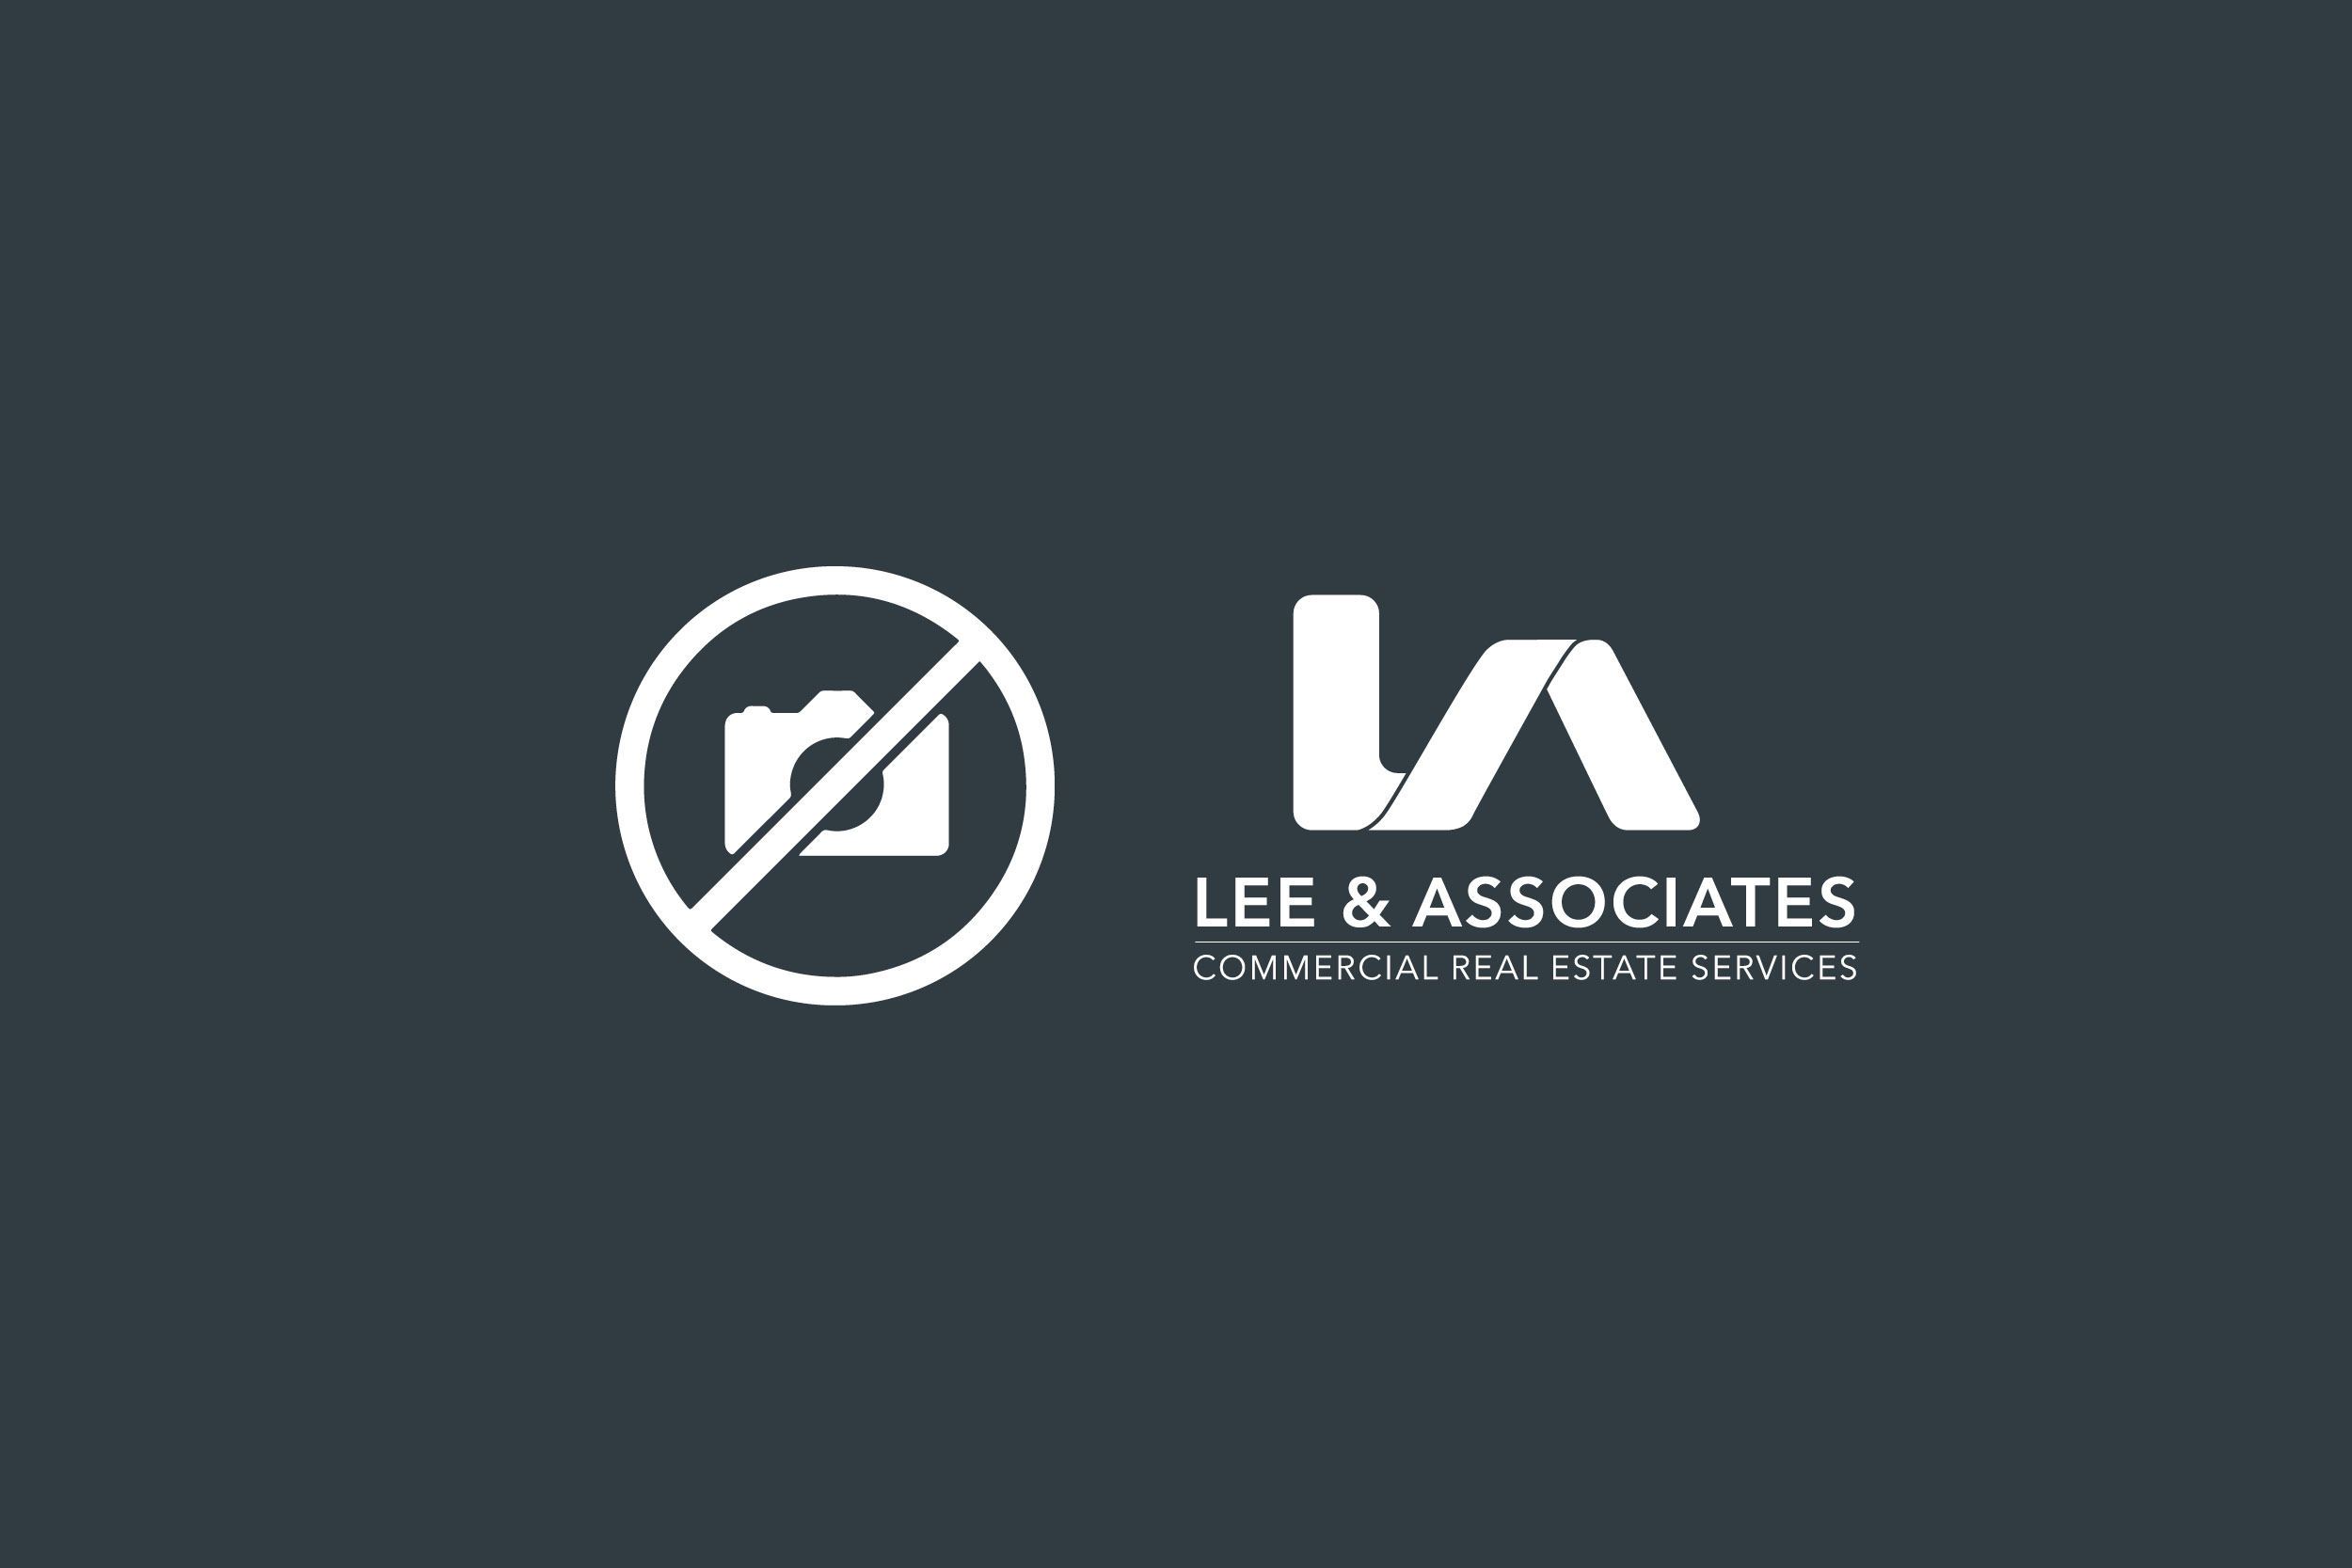 Lee & Associates Dallas Fort Worth Negotiates a 24,368 SF Industrial Lease Transaction